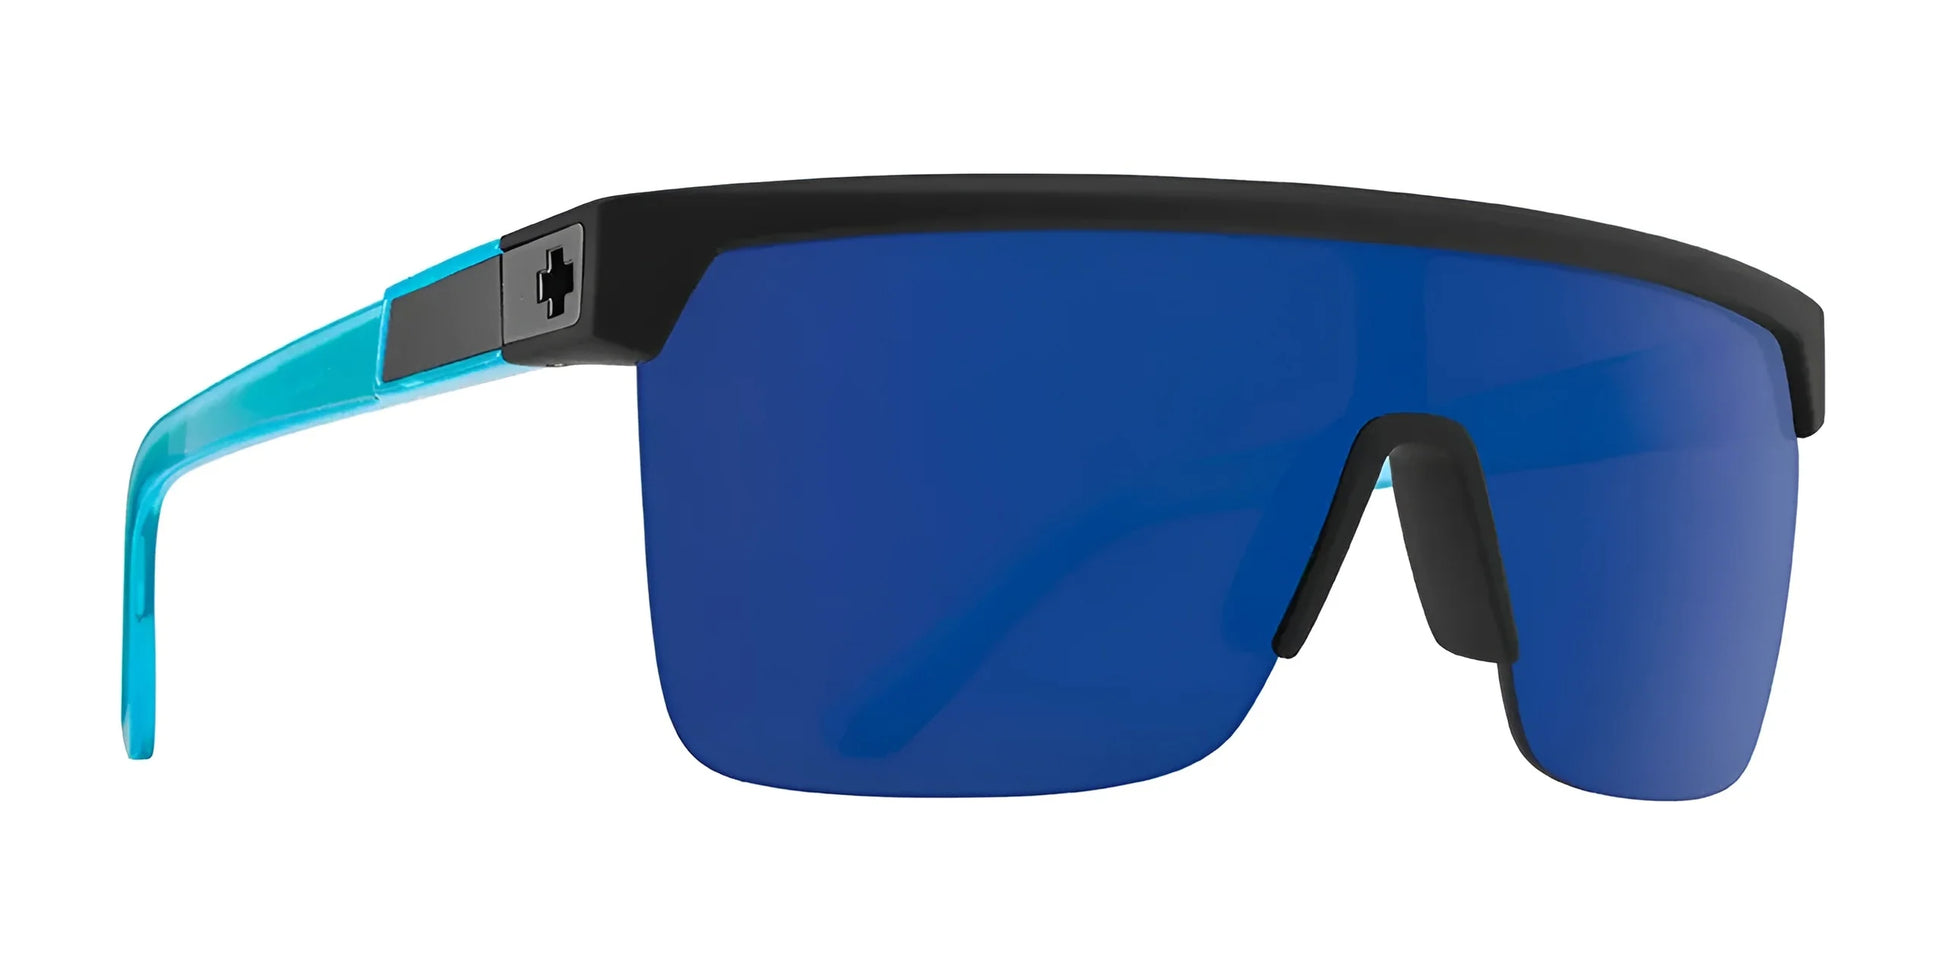 SPY FLYNN 50/50 Sunglasses Soft Matte Black Translucent Blue / HD Plus Gray Green with Dark Blue Spectra Mirror